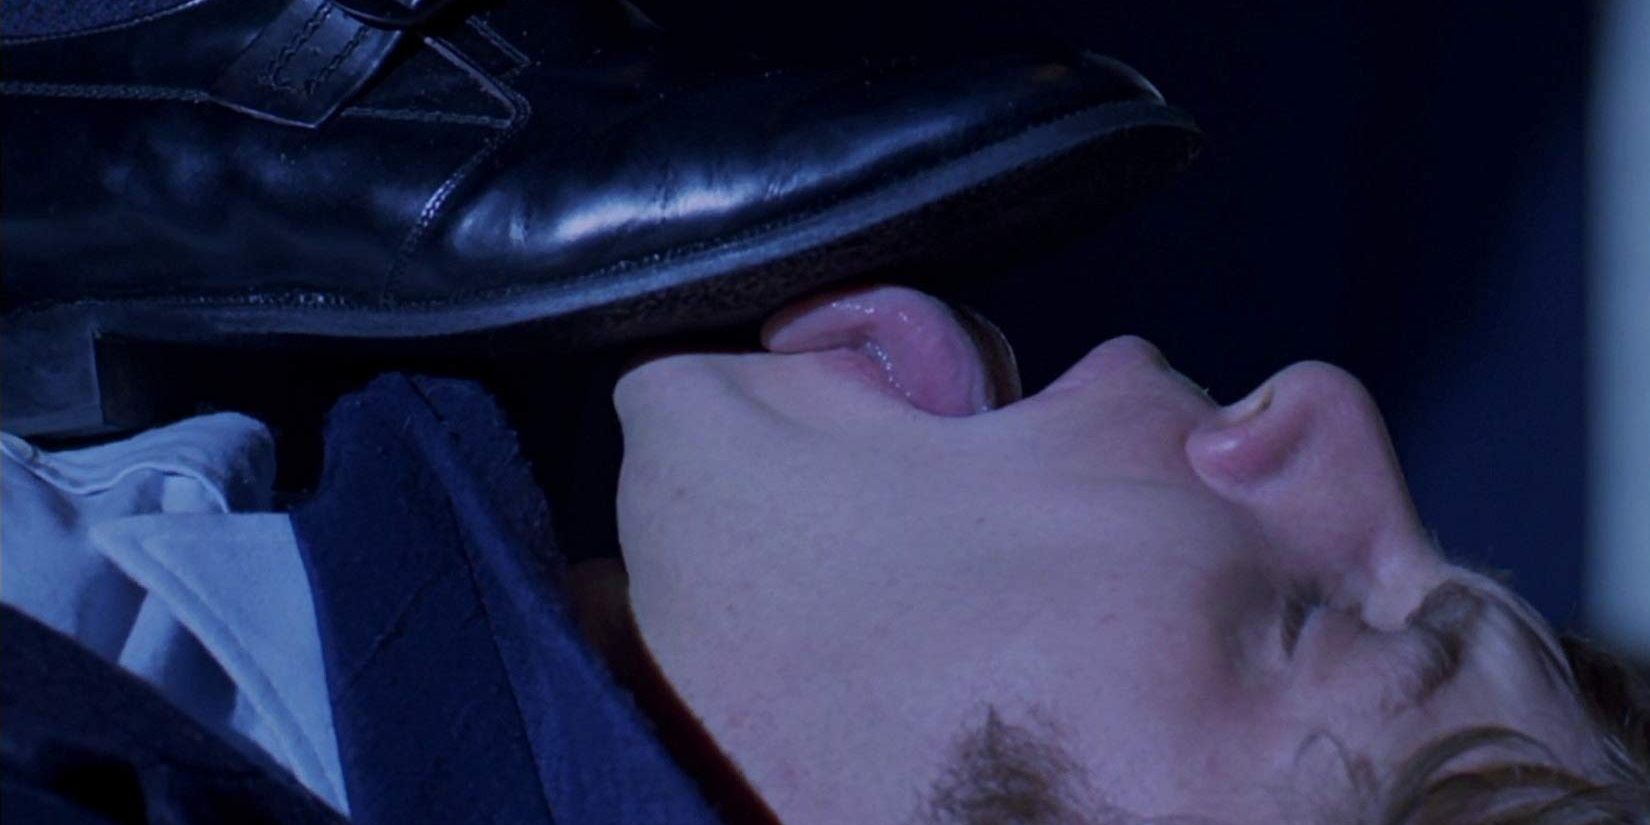 Alex licks a correction officer's boot in A Clockwork Orange